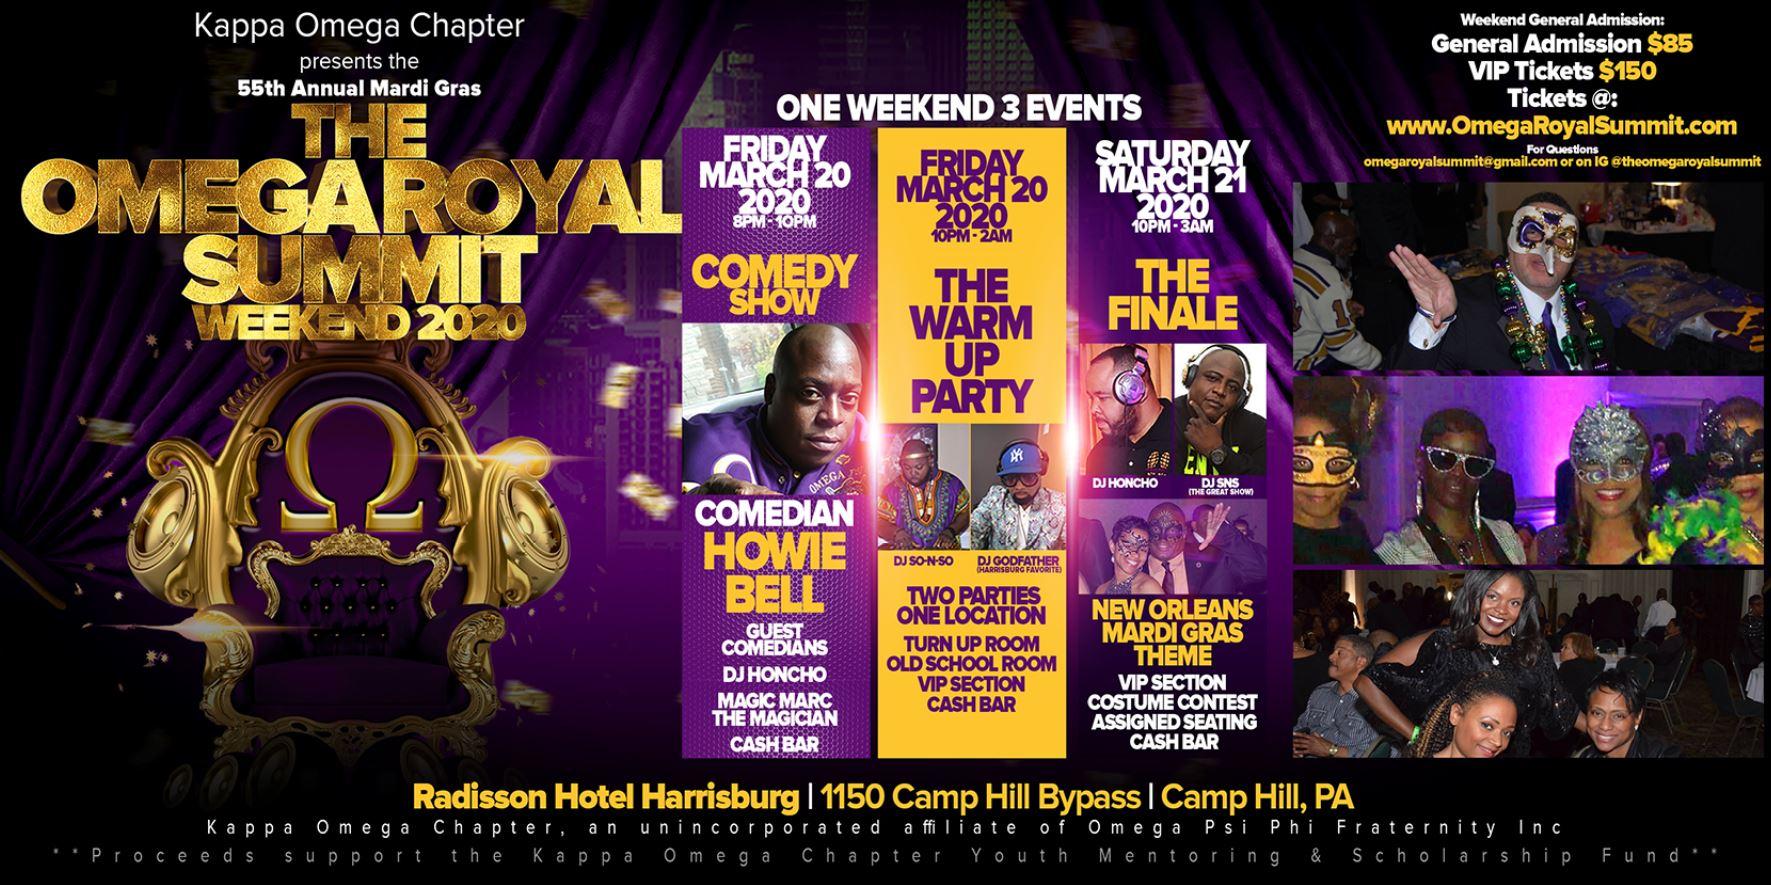 Omega Royal Summit Weekend 2020 (Kappa Omega Chapter Mardi Gras) 28